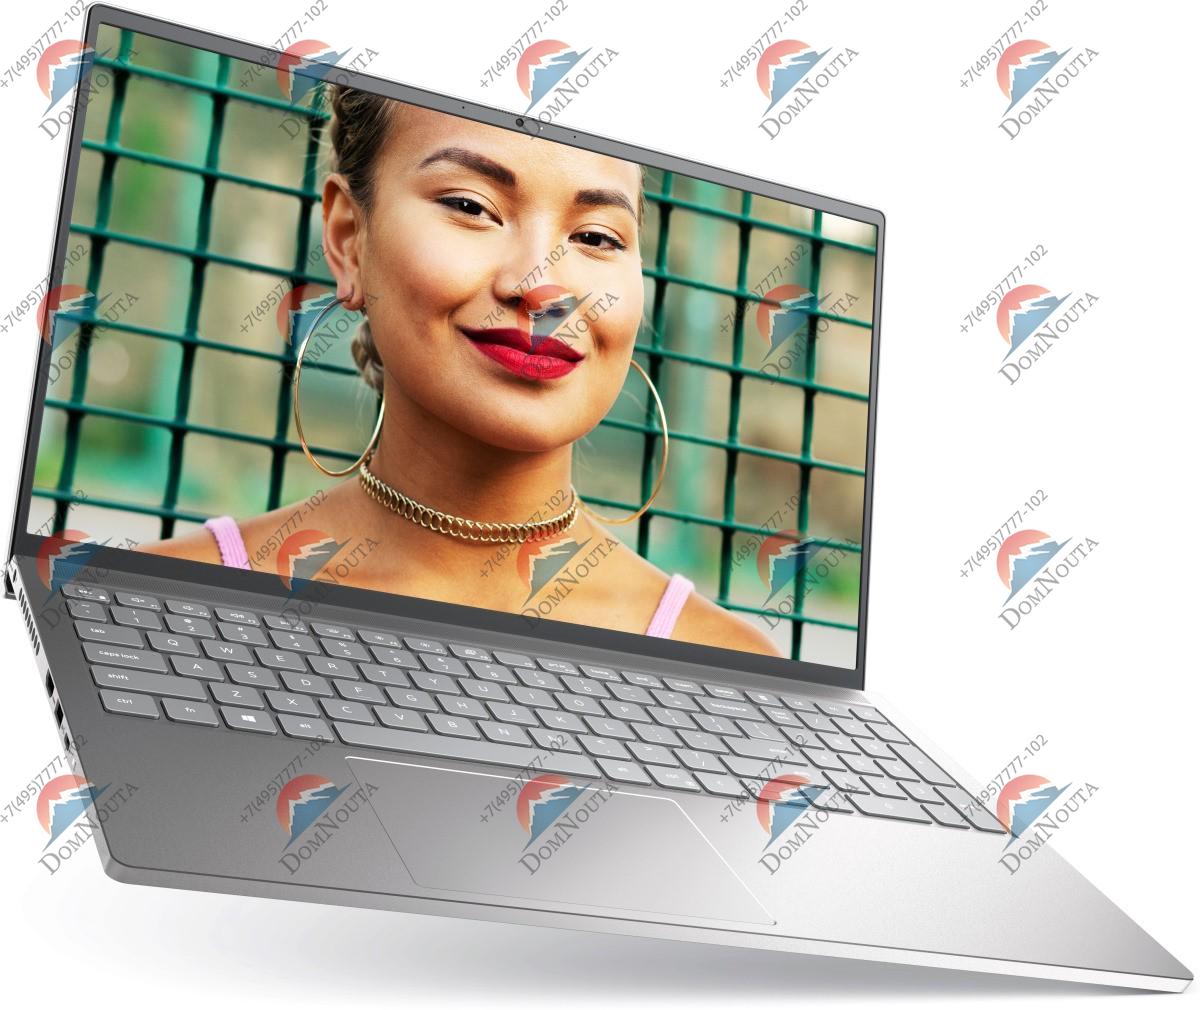 Ноутбук Dell Inspiron 7510